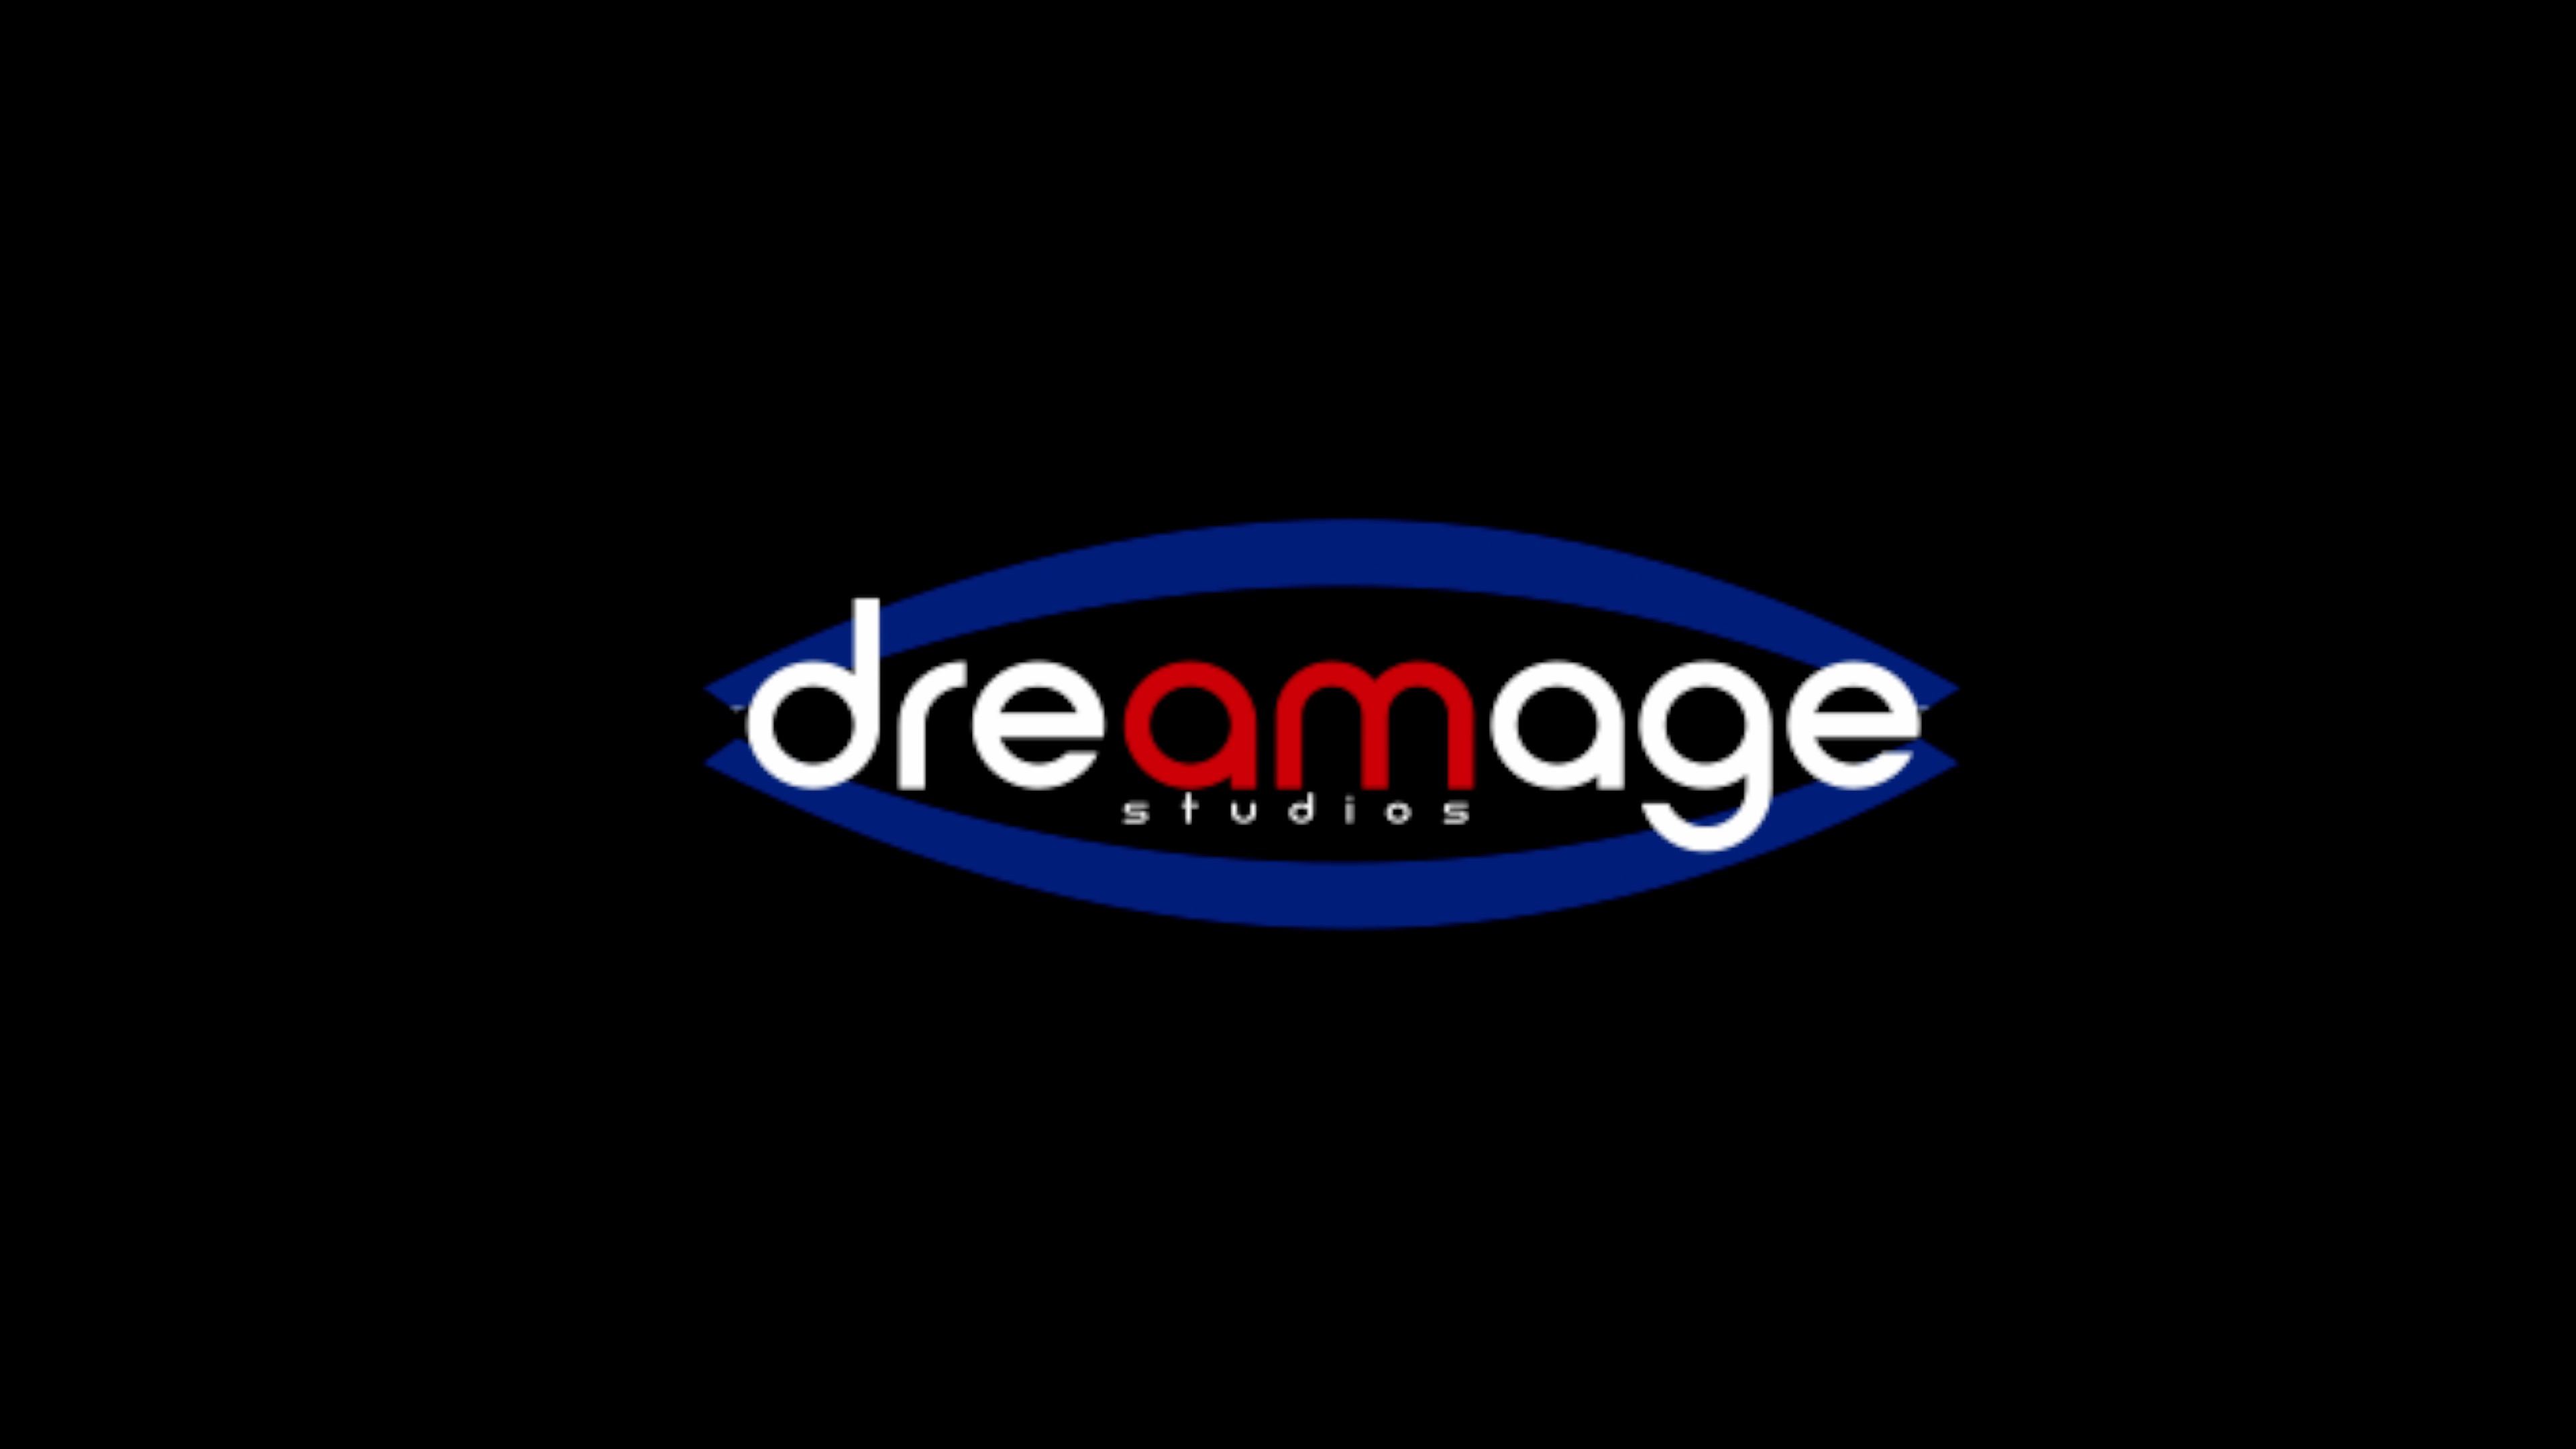 Dreamage studios